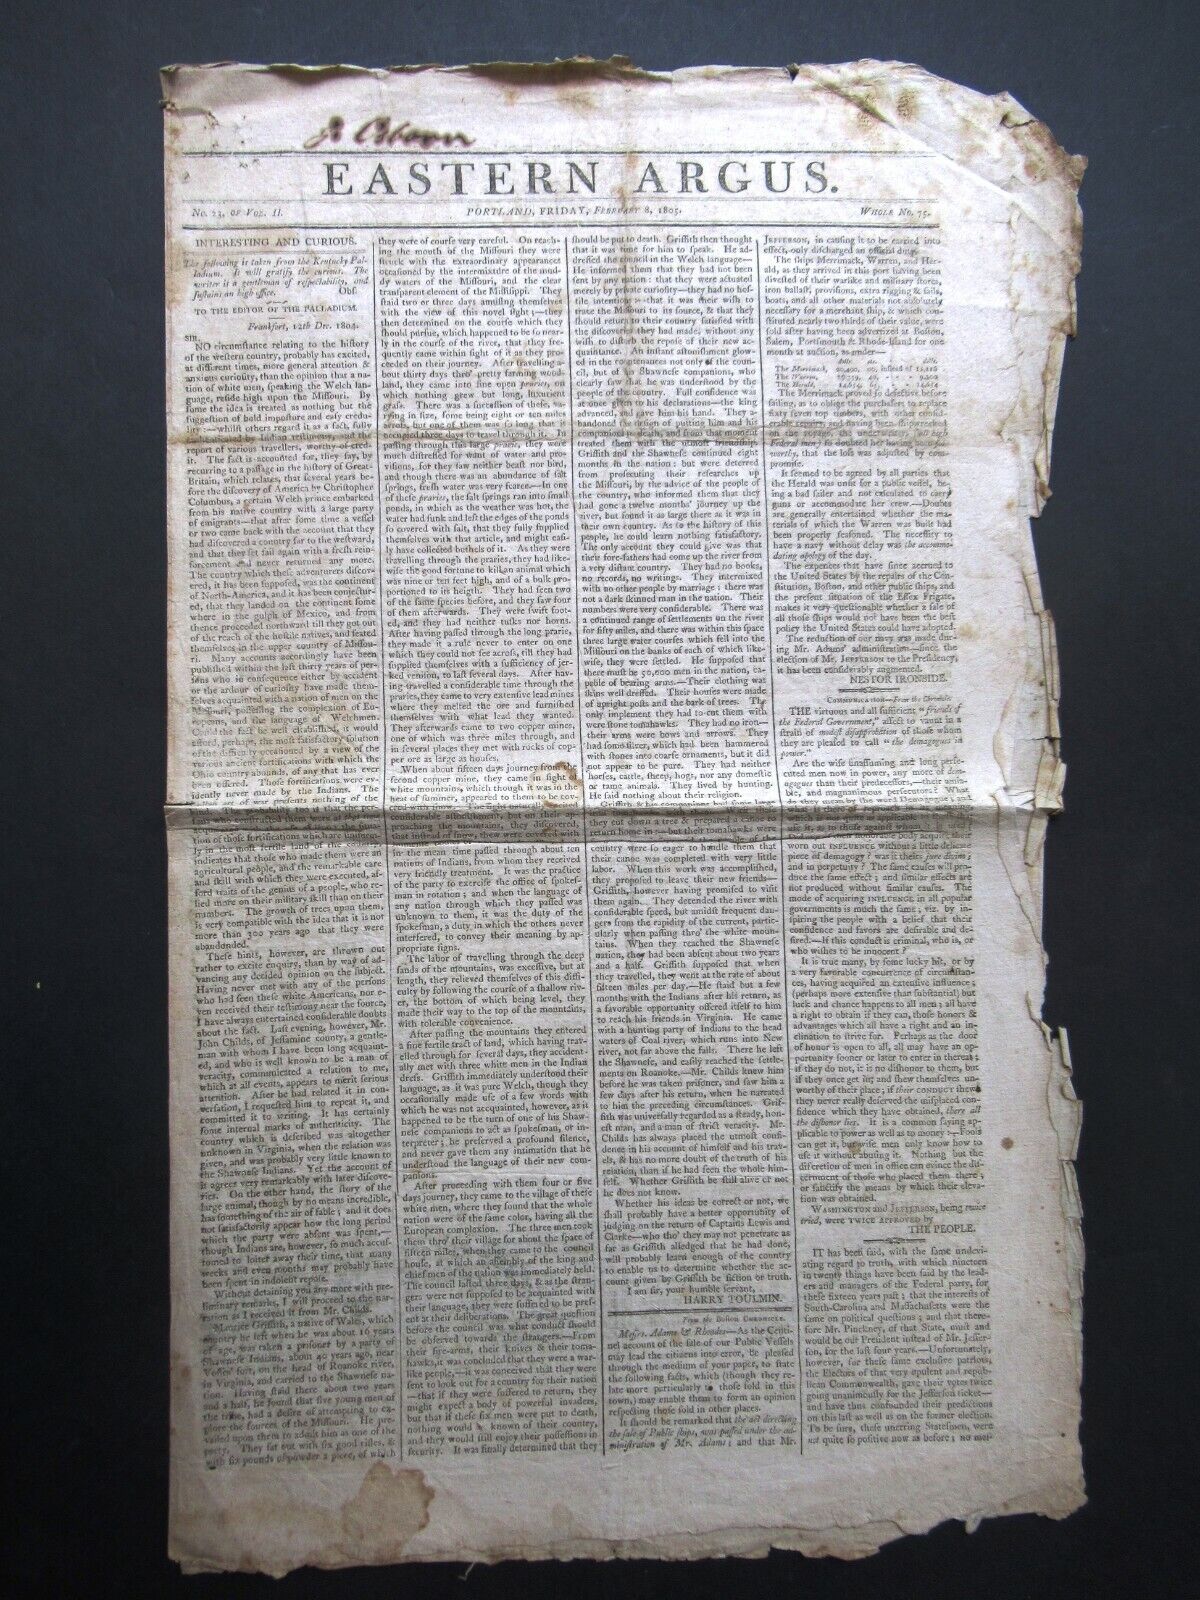 Feb 8 1805 Portland Maine -  Eastern Argus Newspaper - Original 